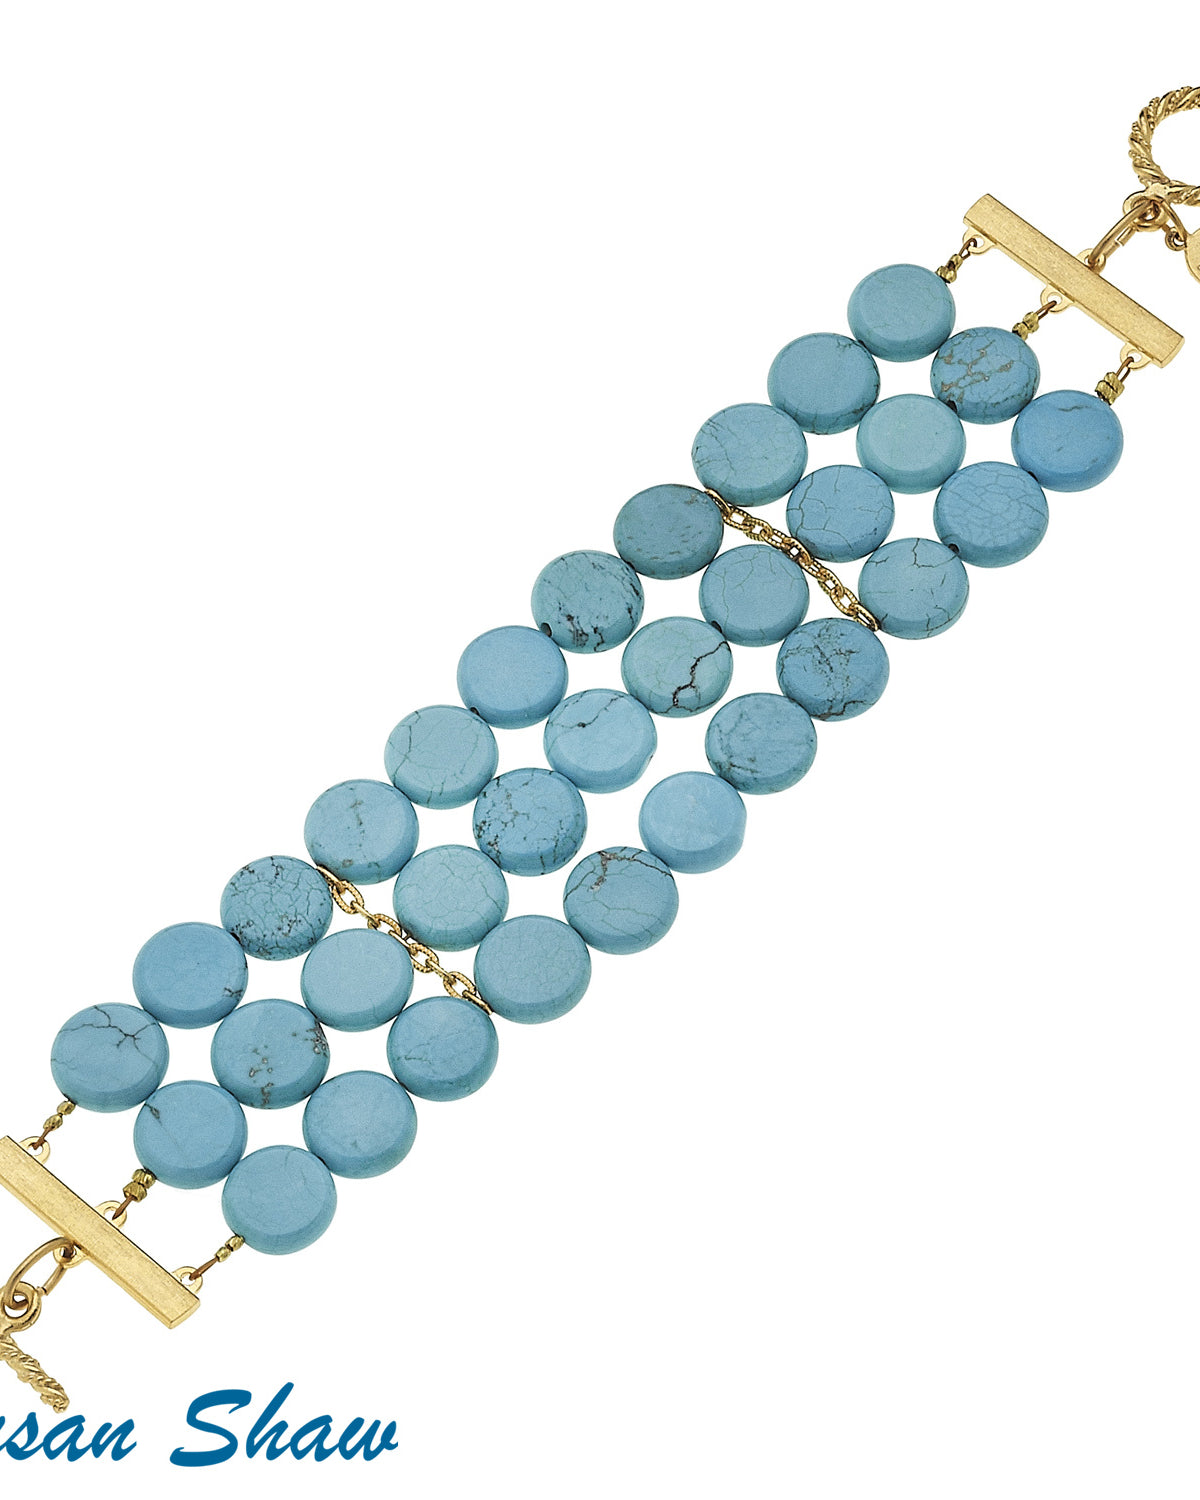 Susan Shaw Turquoise Row Bracelet.